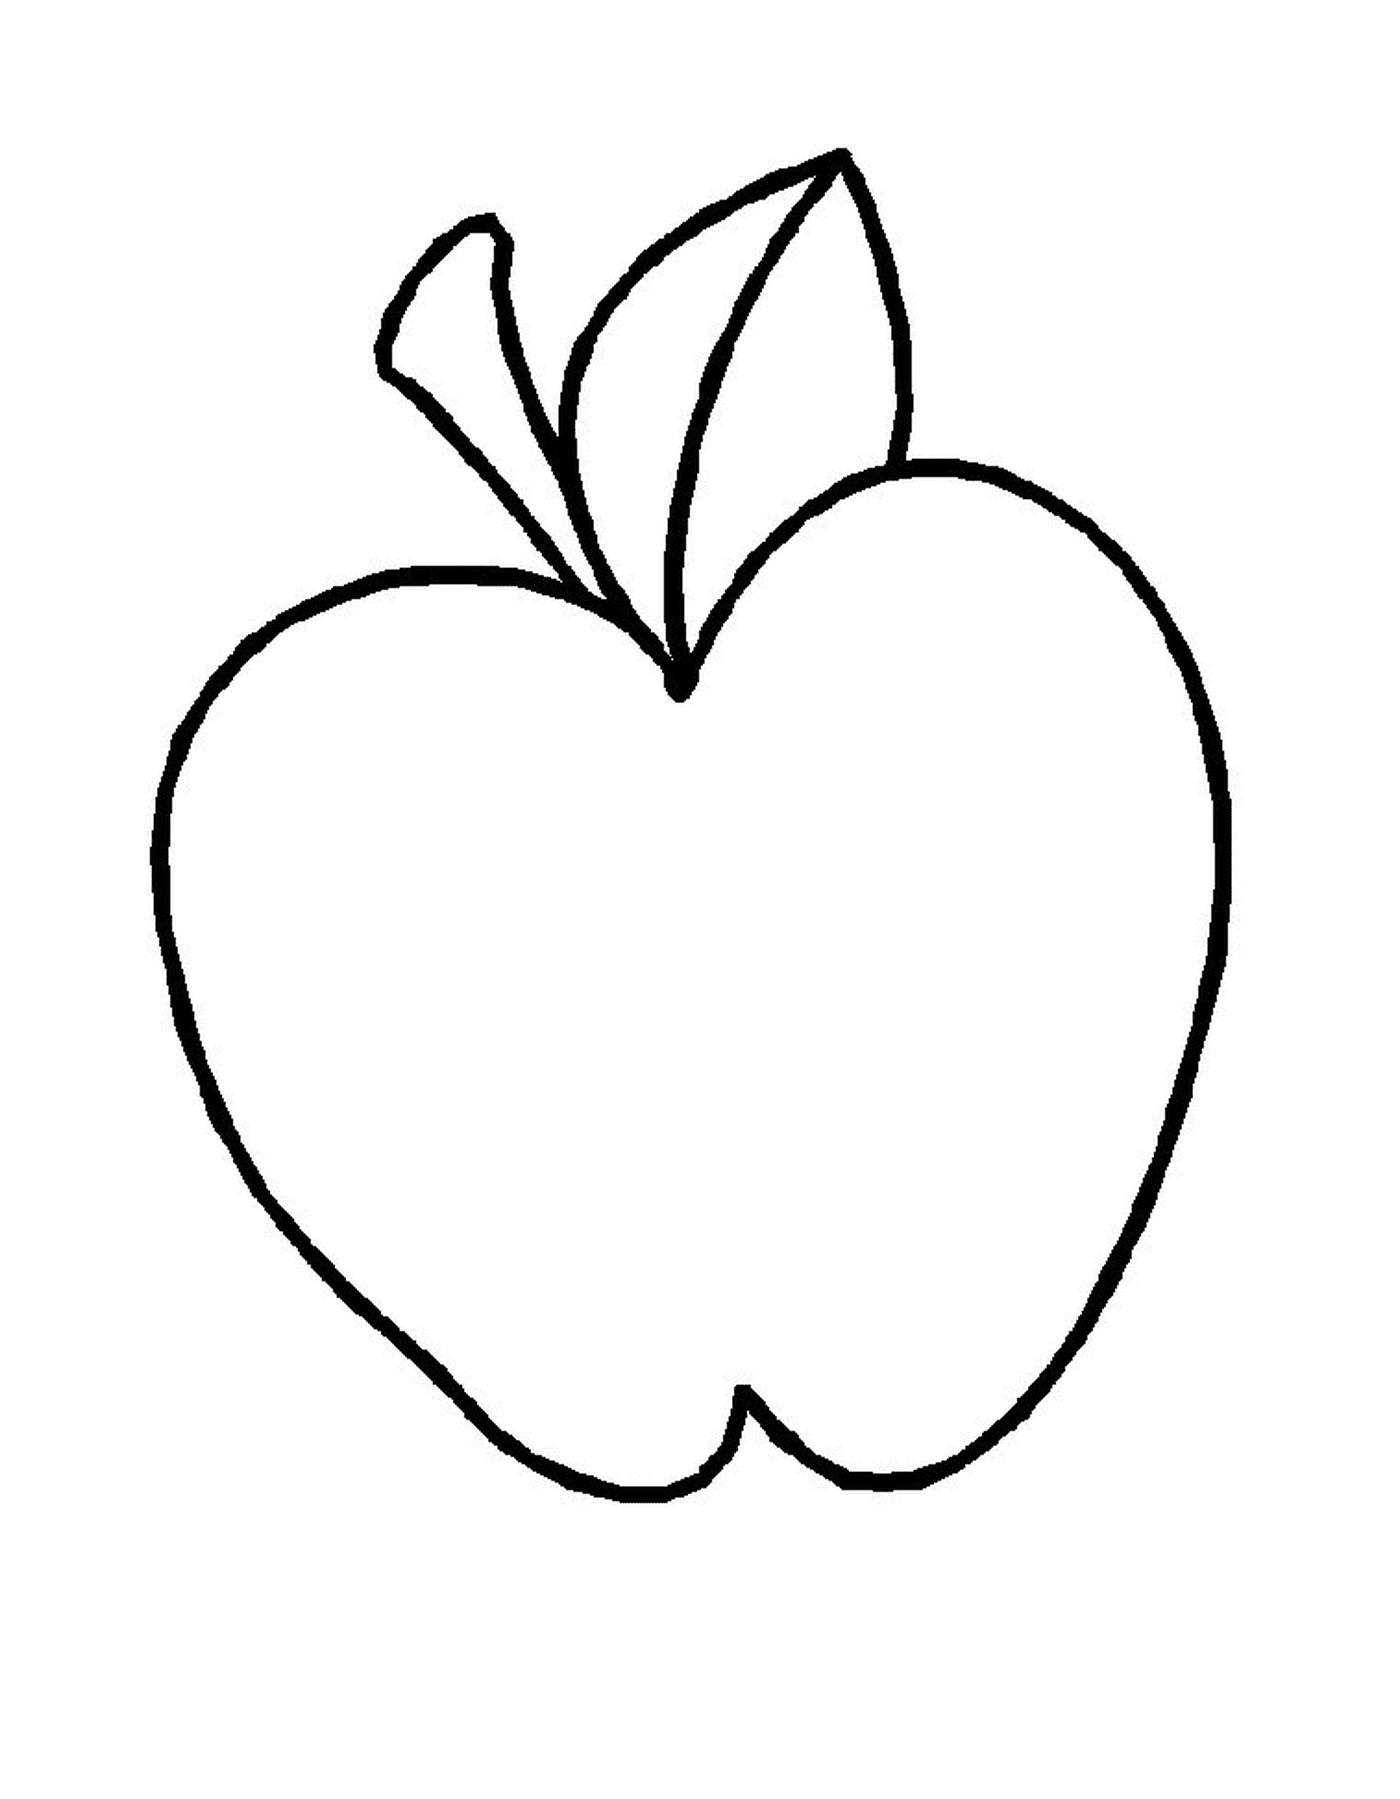  crouching apple drawn 